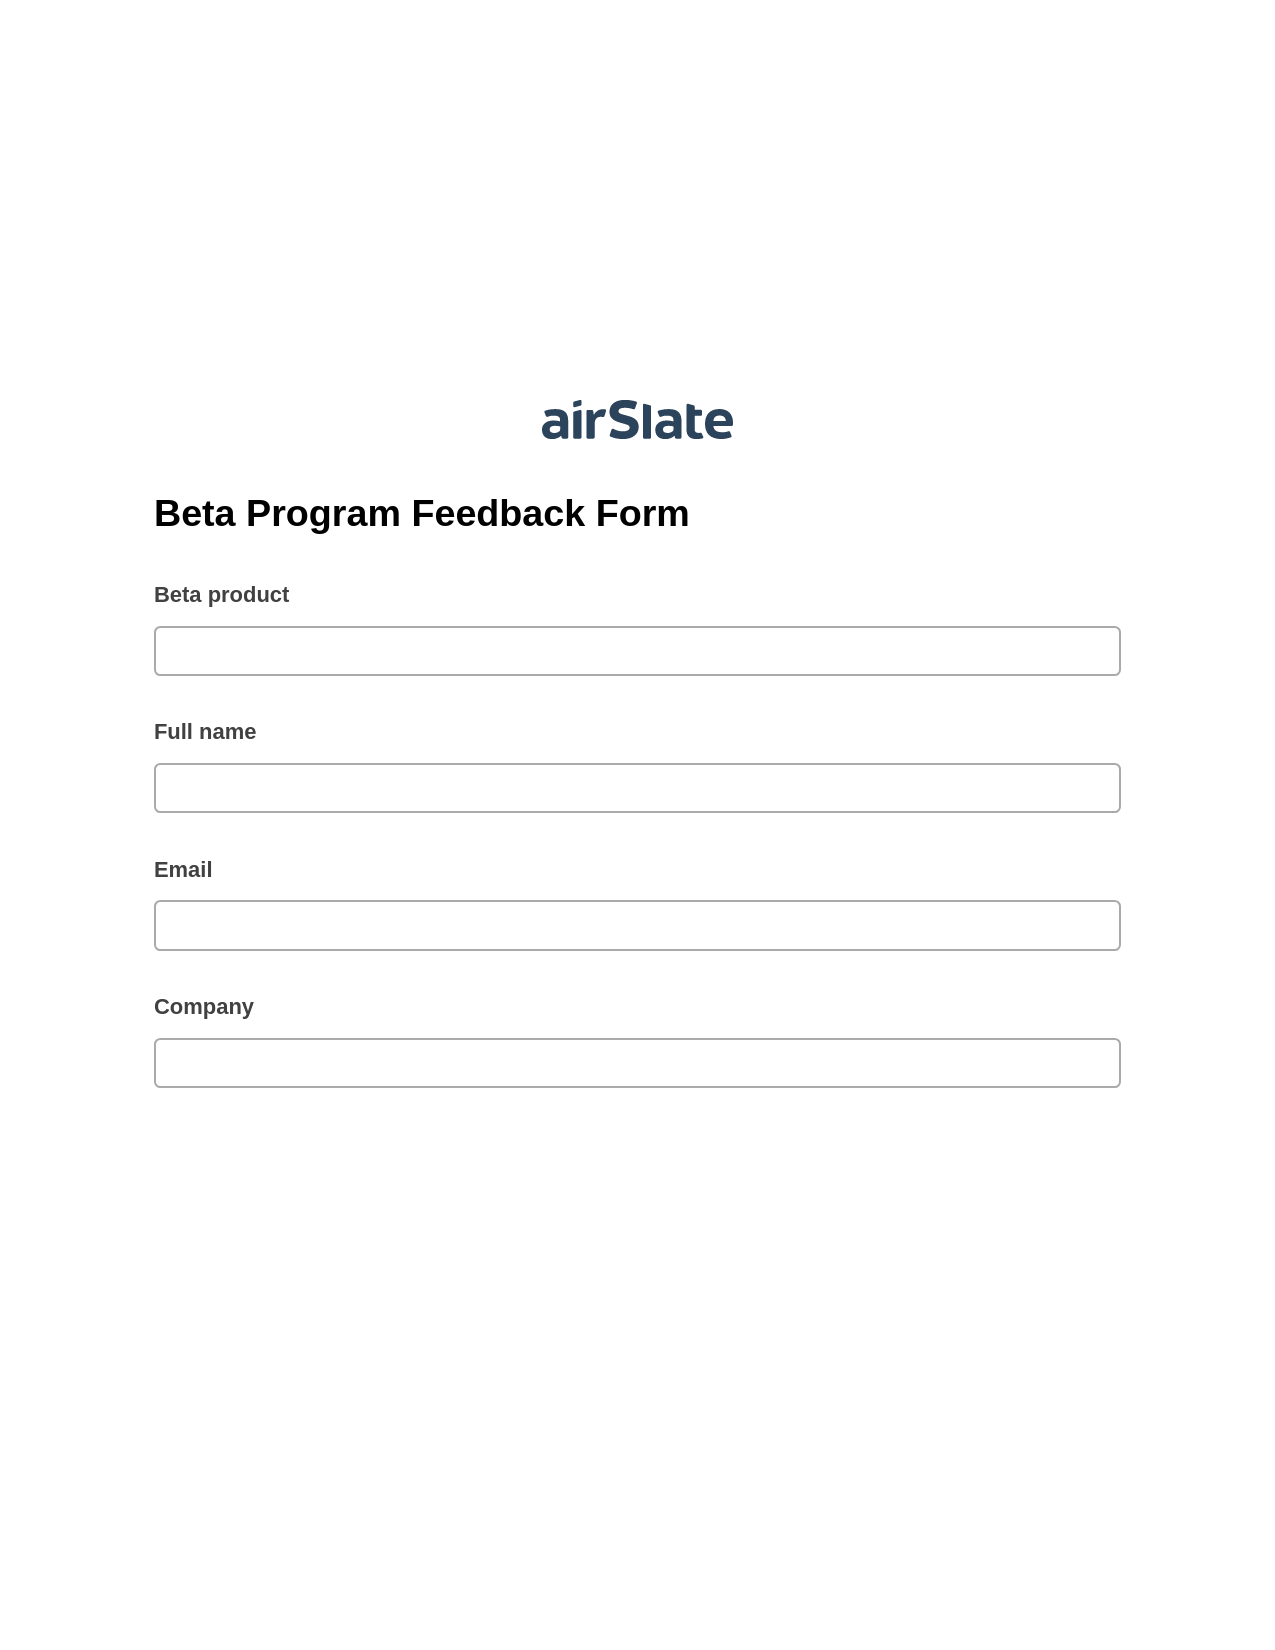 Beta Program Feedback Form Pre-fill from Excel Spreadsheet Bot, Reminder Bot, Archive to SharePoint Folder Bot